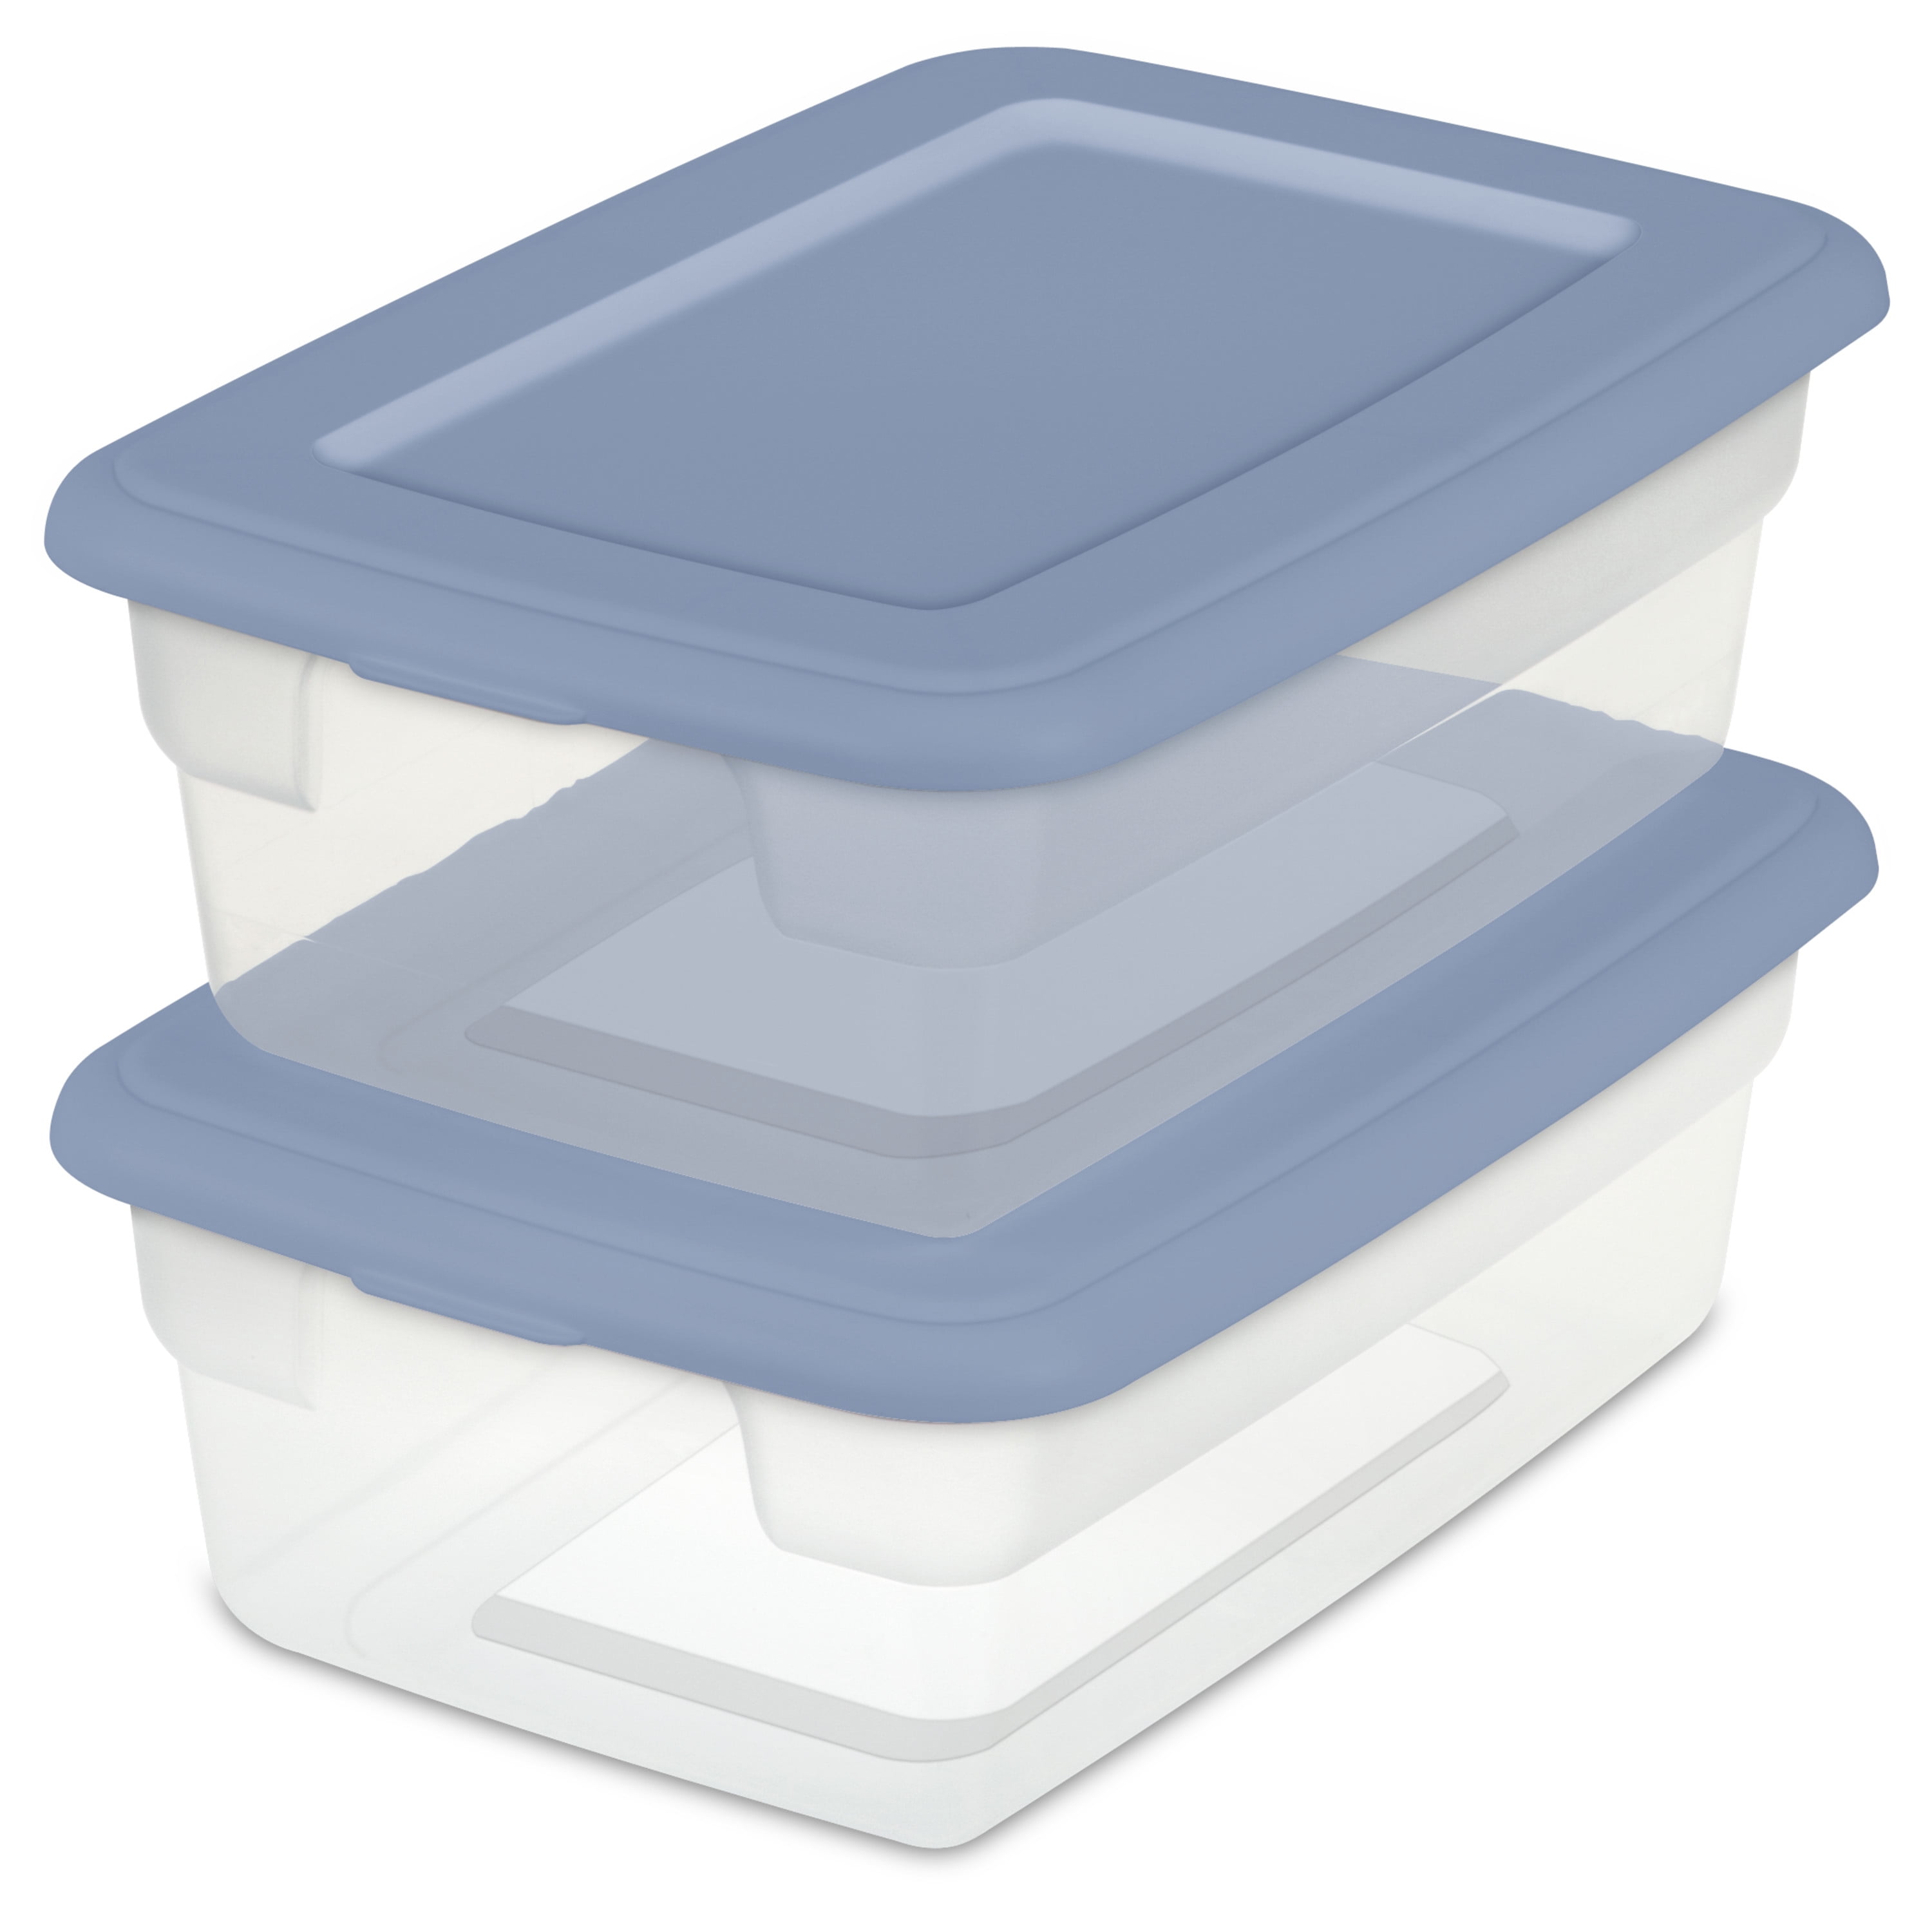 Sterilite Storage Box - Marine Blue/Clear, 1 Piece - Fry's Food Stores